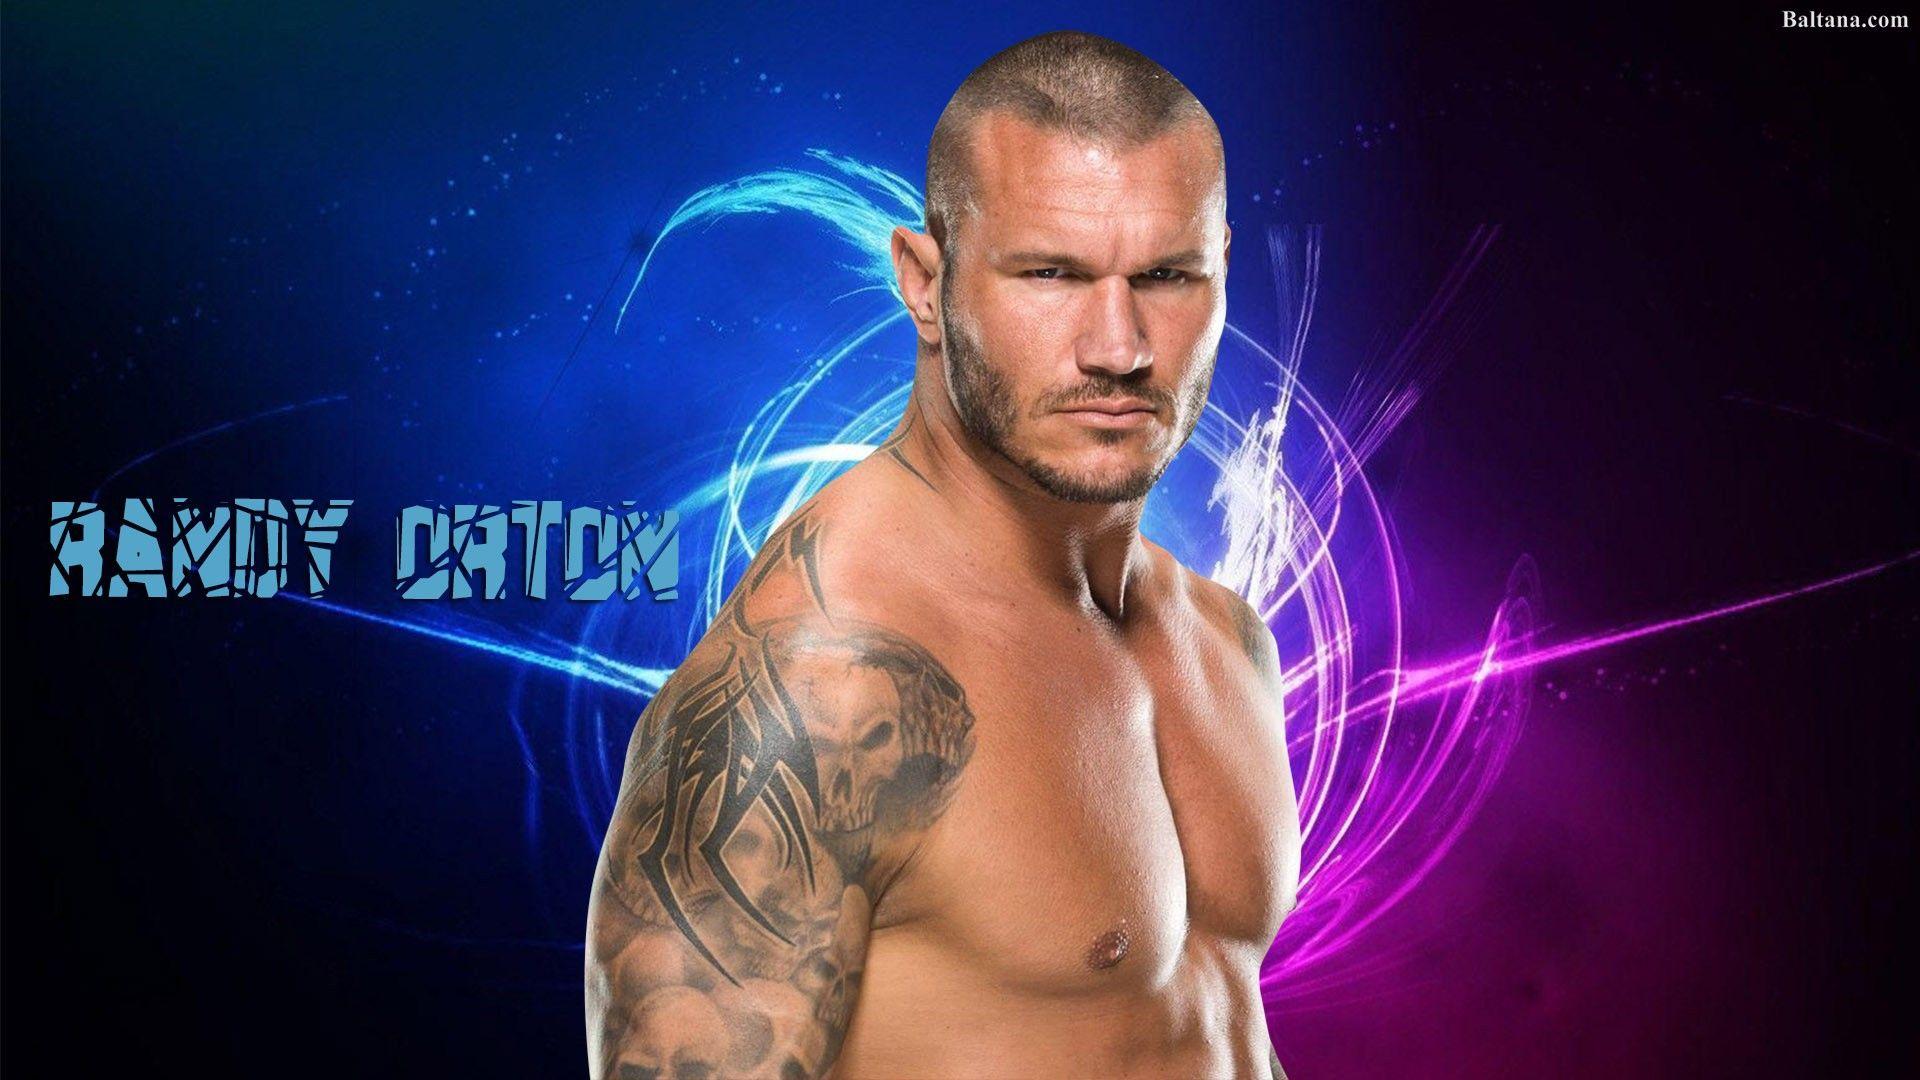 Randy Orton Wallpapers - Top Free Randy Orton Backgrounds - WallpaperAccess